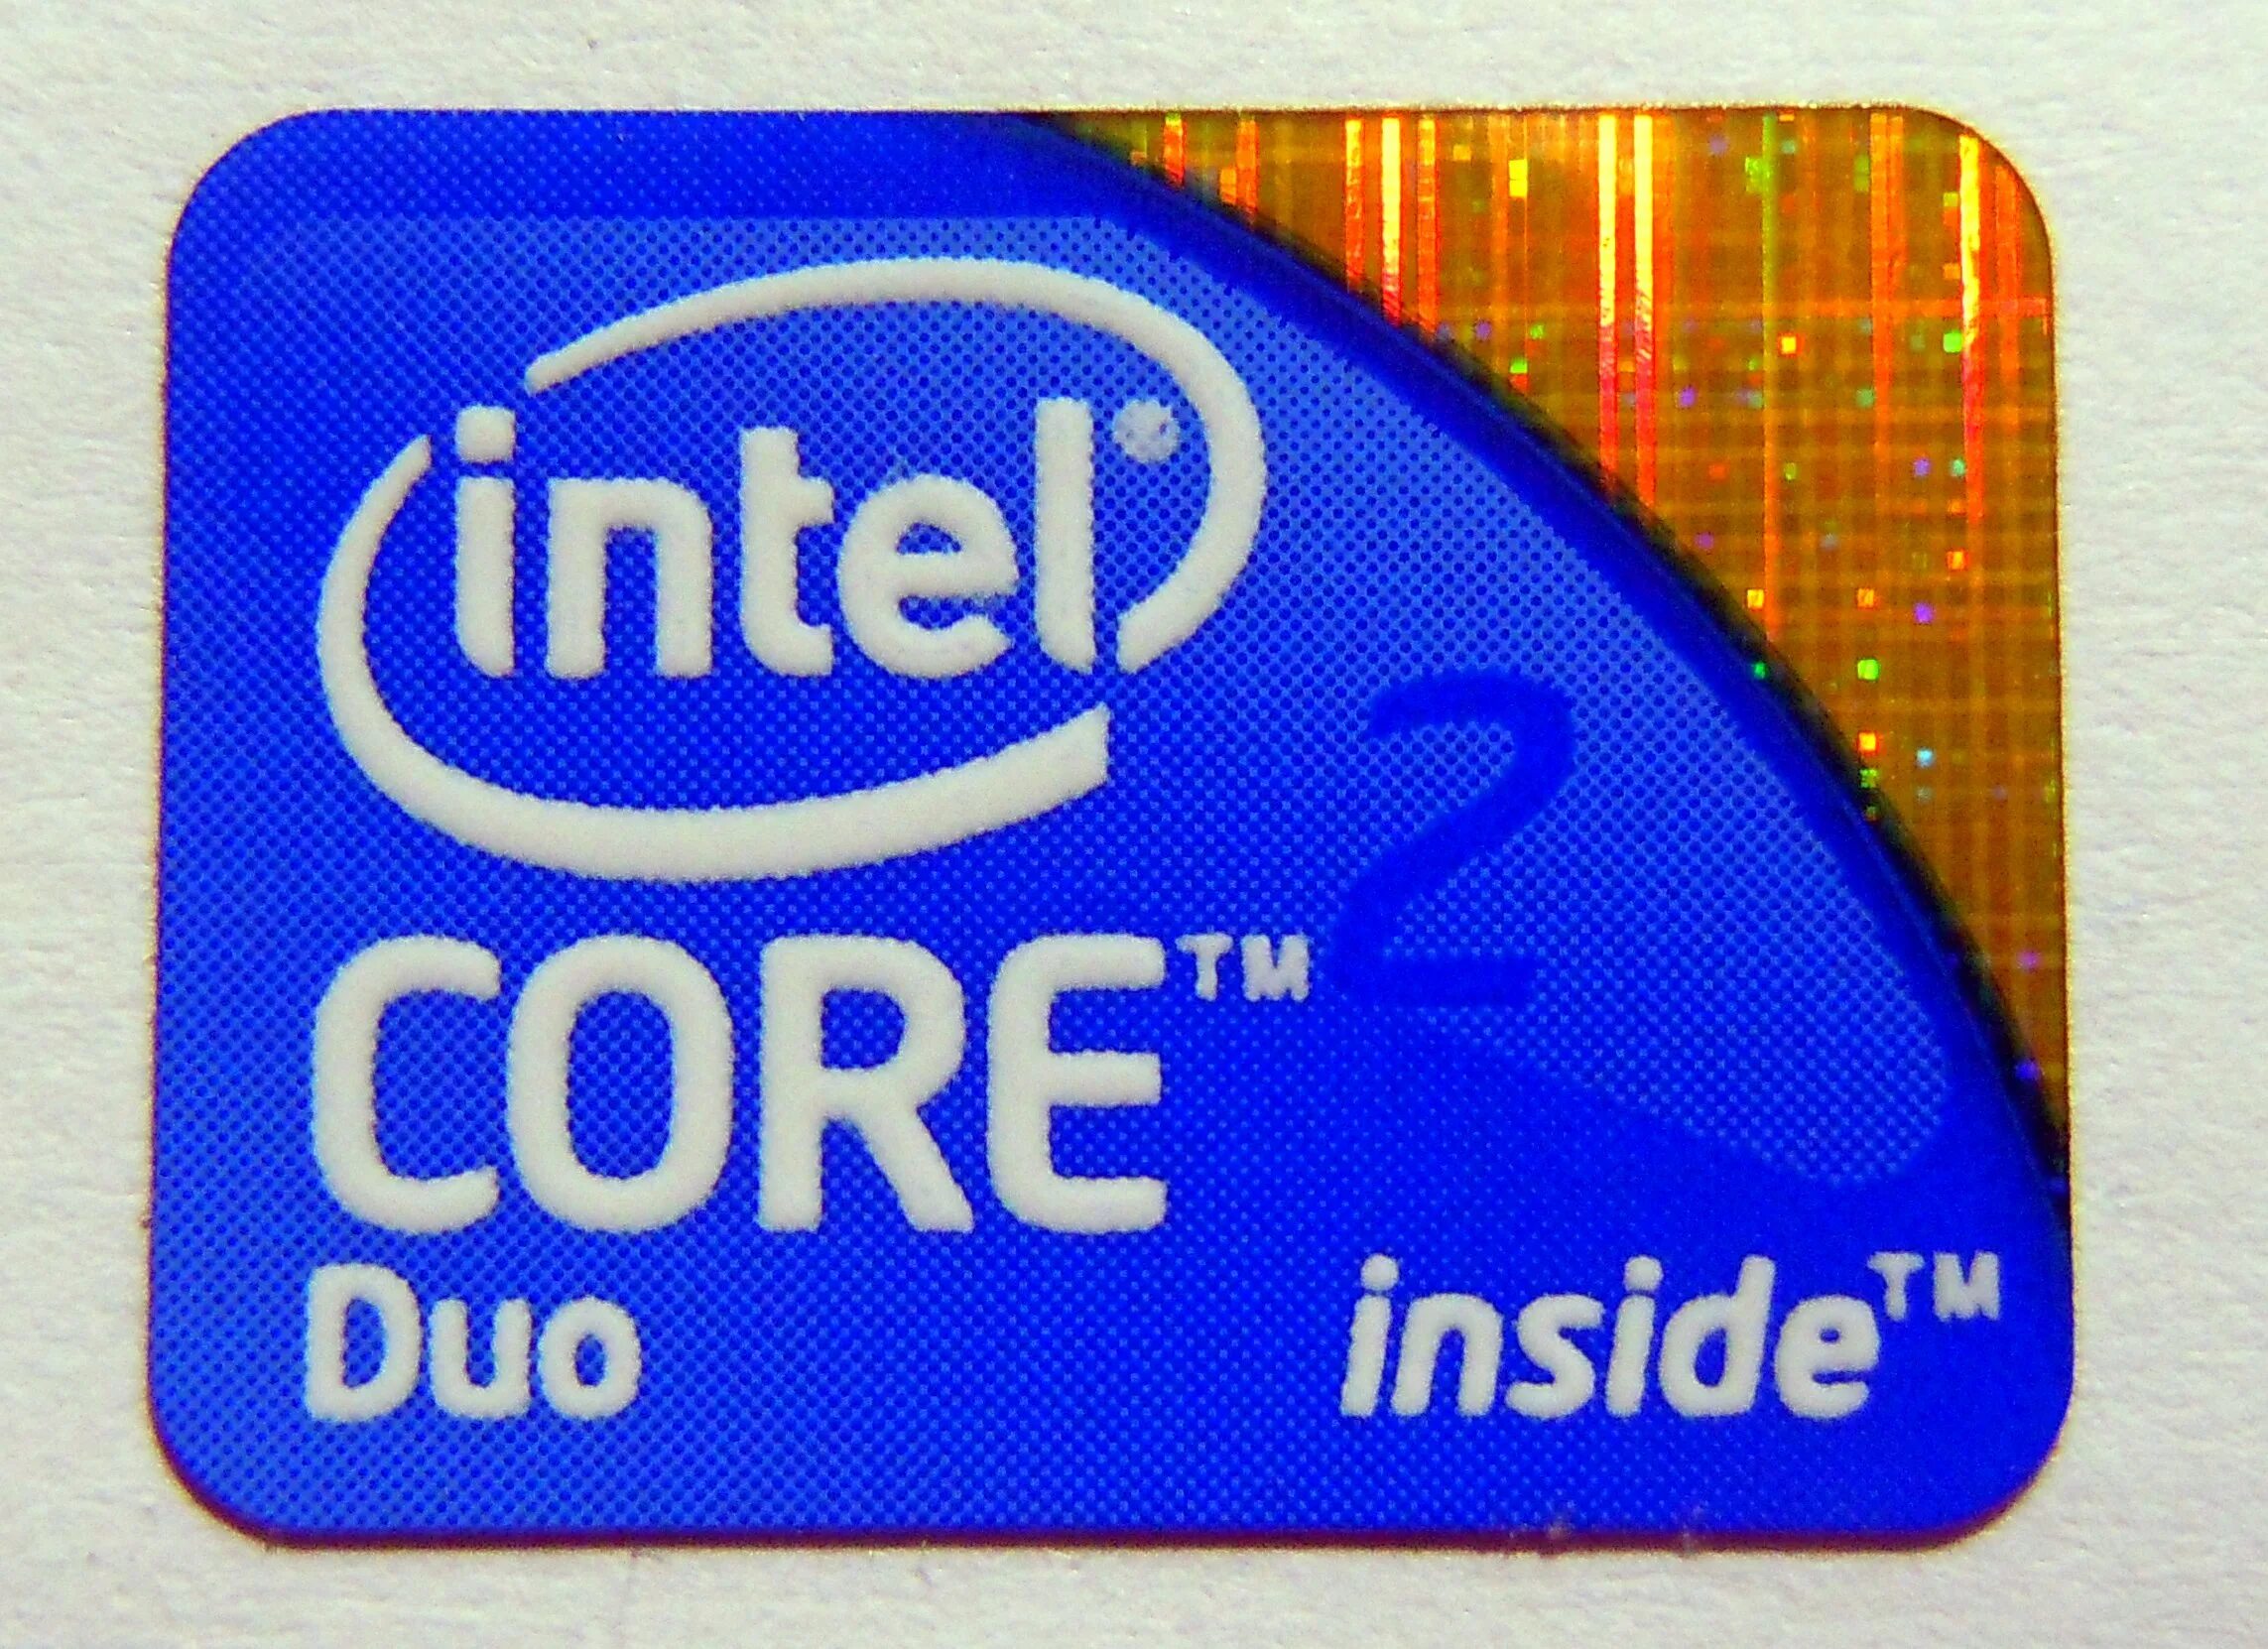 Intel core 2 duo память. Наклейка Intel Core 2 Duo. Intel Core 2 Duo logo. Intel Core 2 Duo inside. Интел 2 дуо.